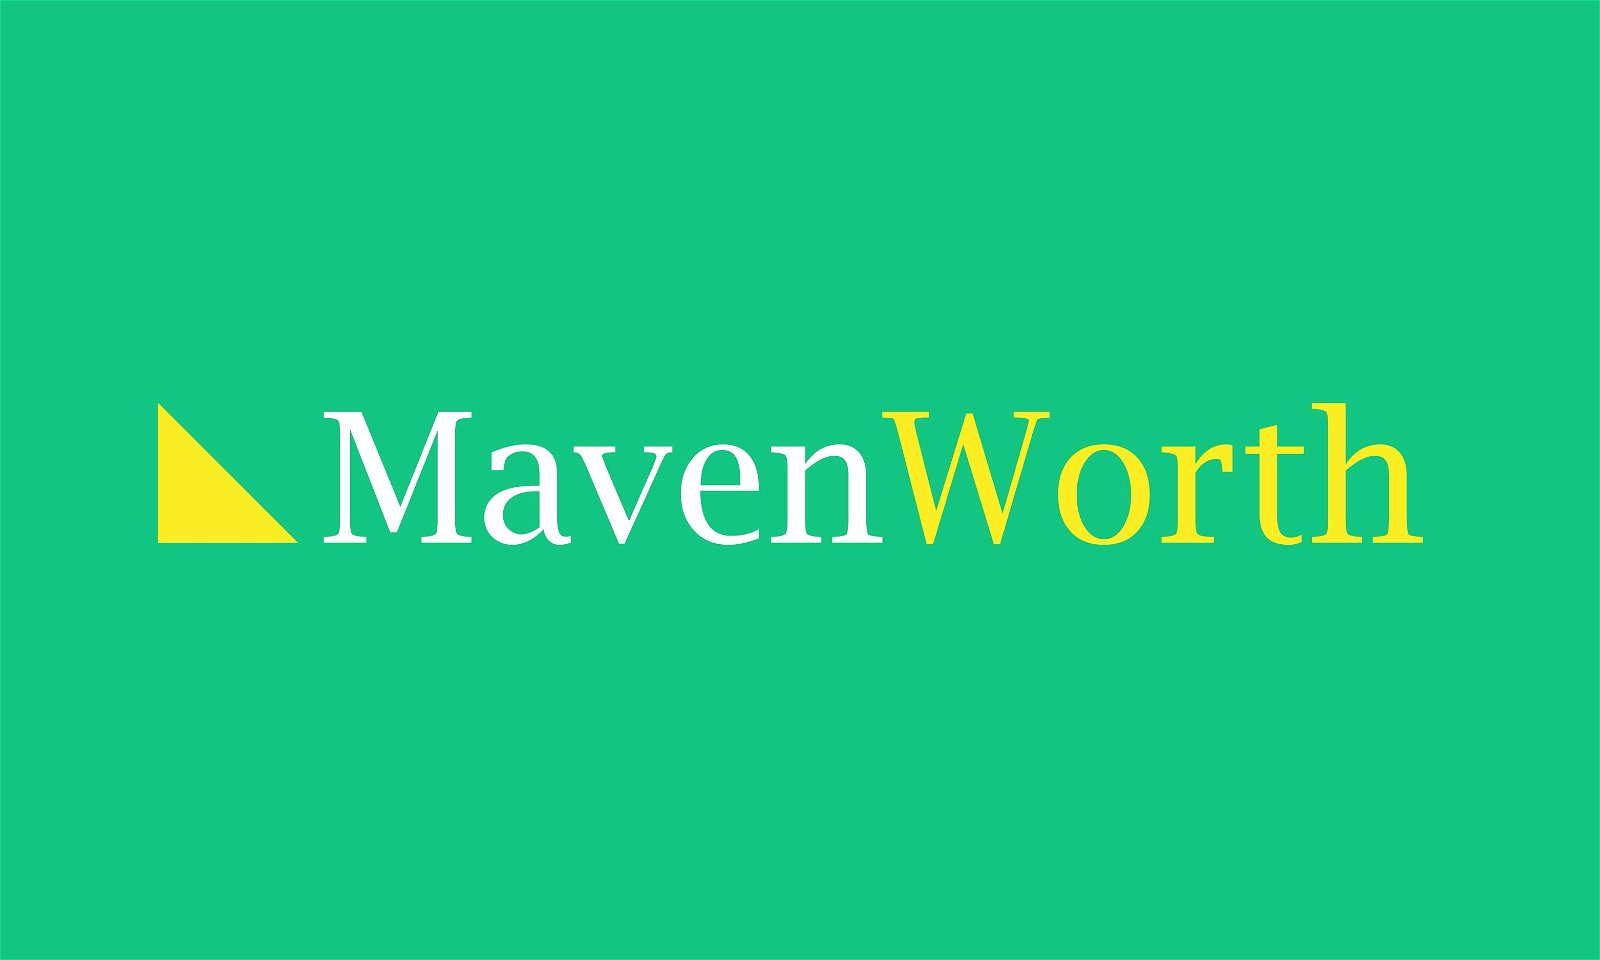 MavenWorth.com - Creative brandable domain for sale